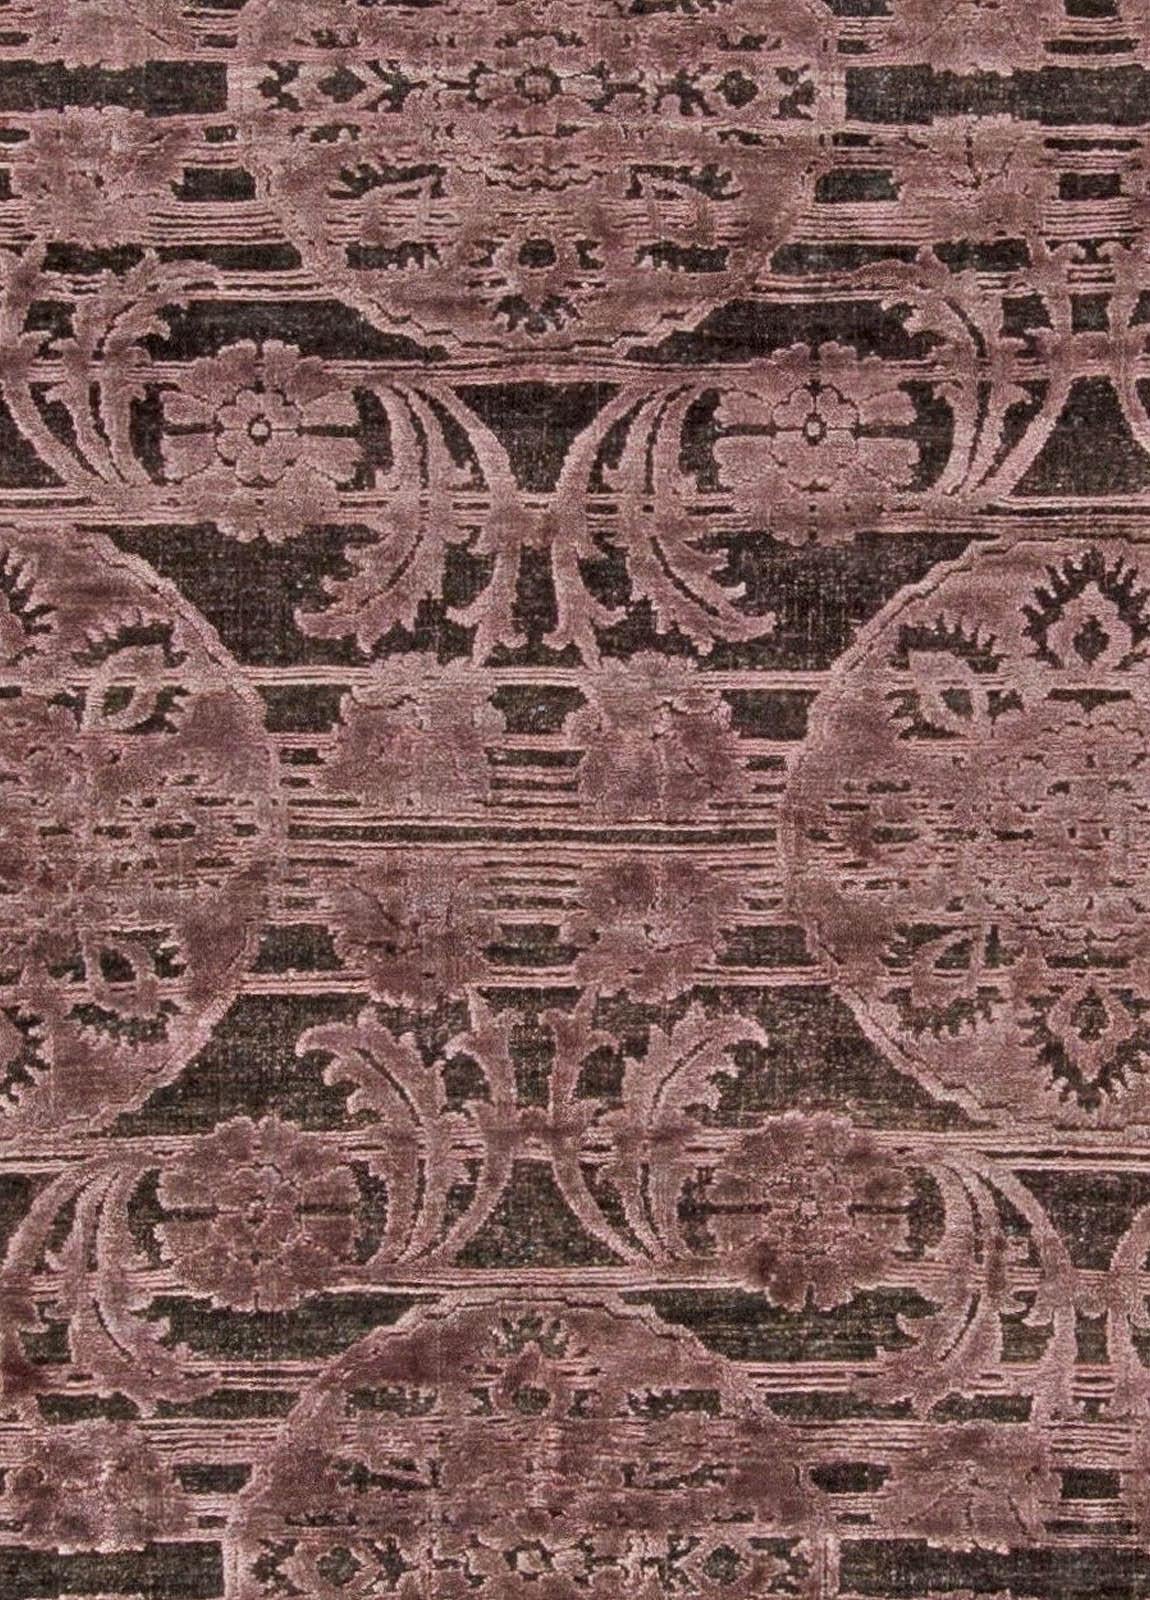 Contemporary Indian handmade wool rug by Doris Leslie Blau.
Size: 12'0